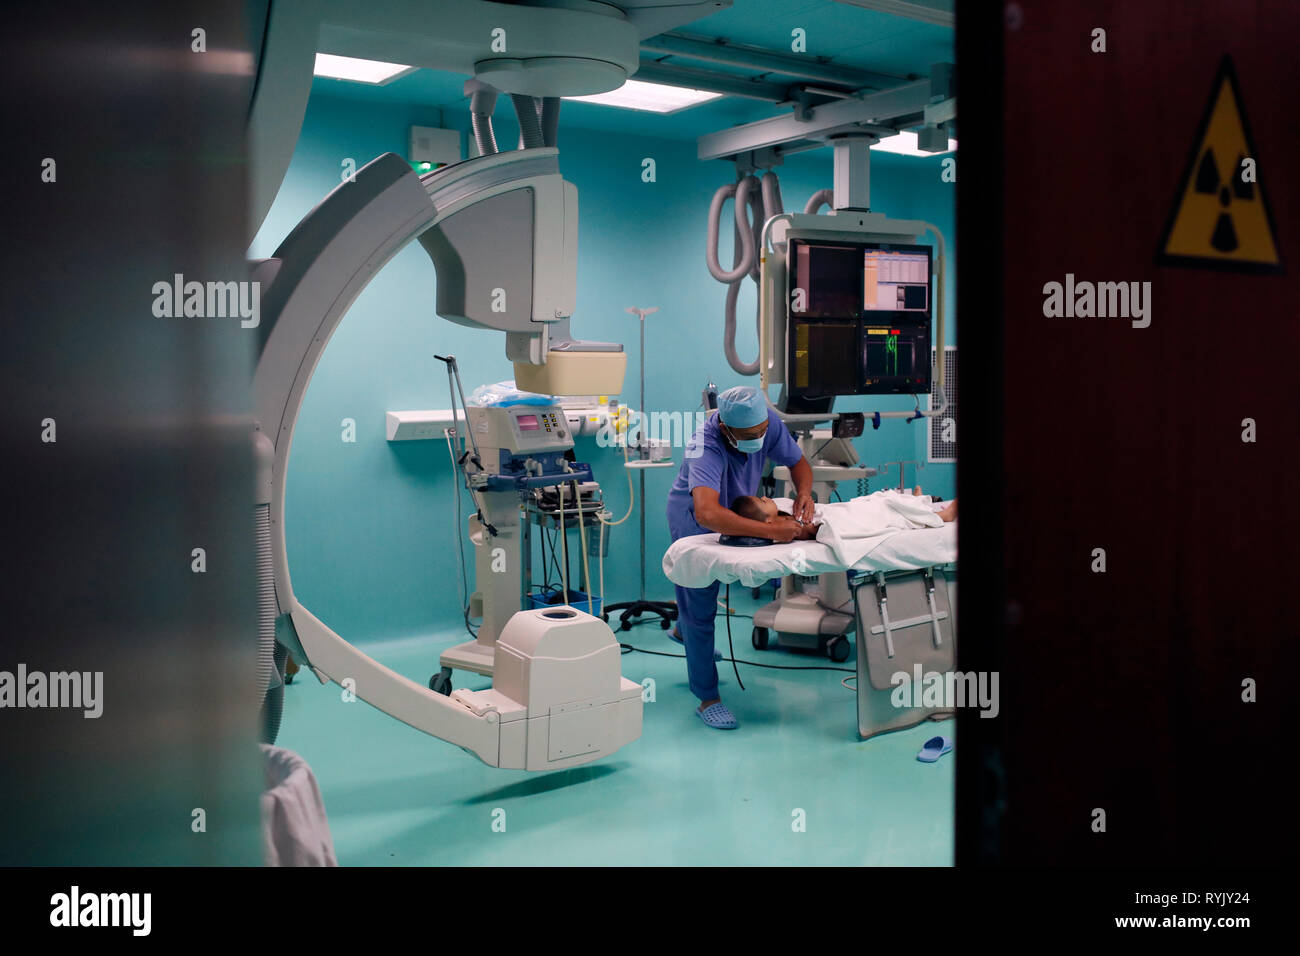 Tam Duc Kardiologie Krankenhaus. Diagnostische Radiologie. Angiographie. Ho Chi Minh City. Vietnam. Stockfoto